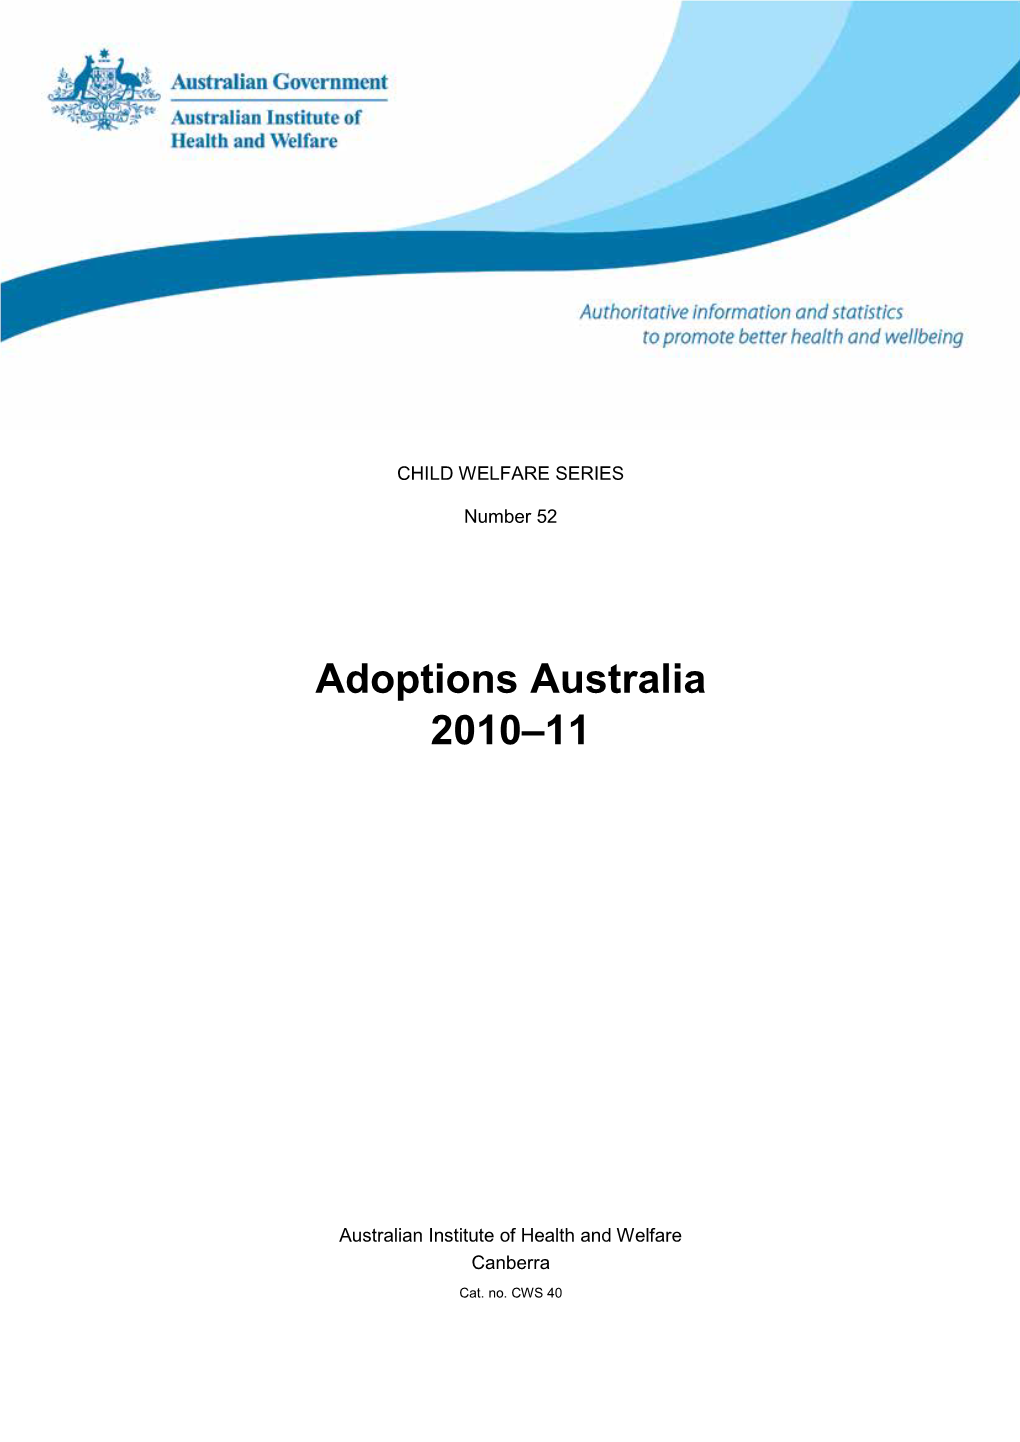 Adoptions Australia 2010-11